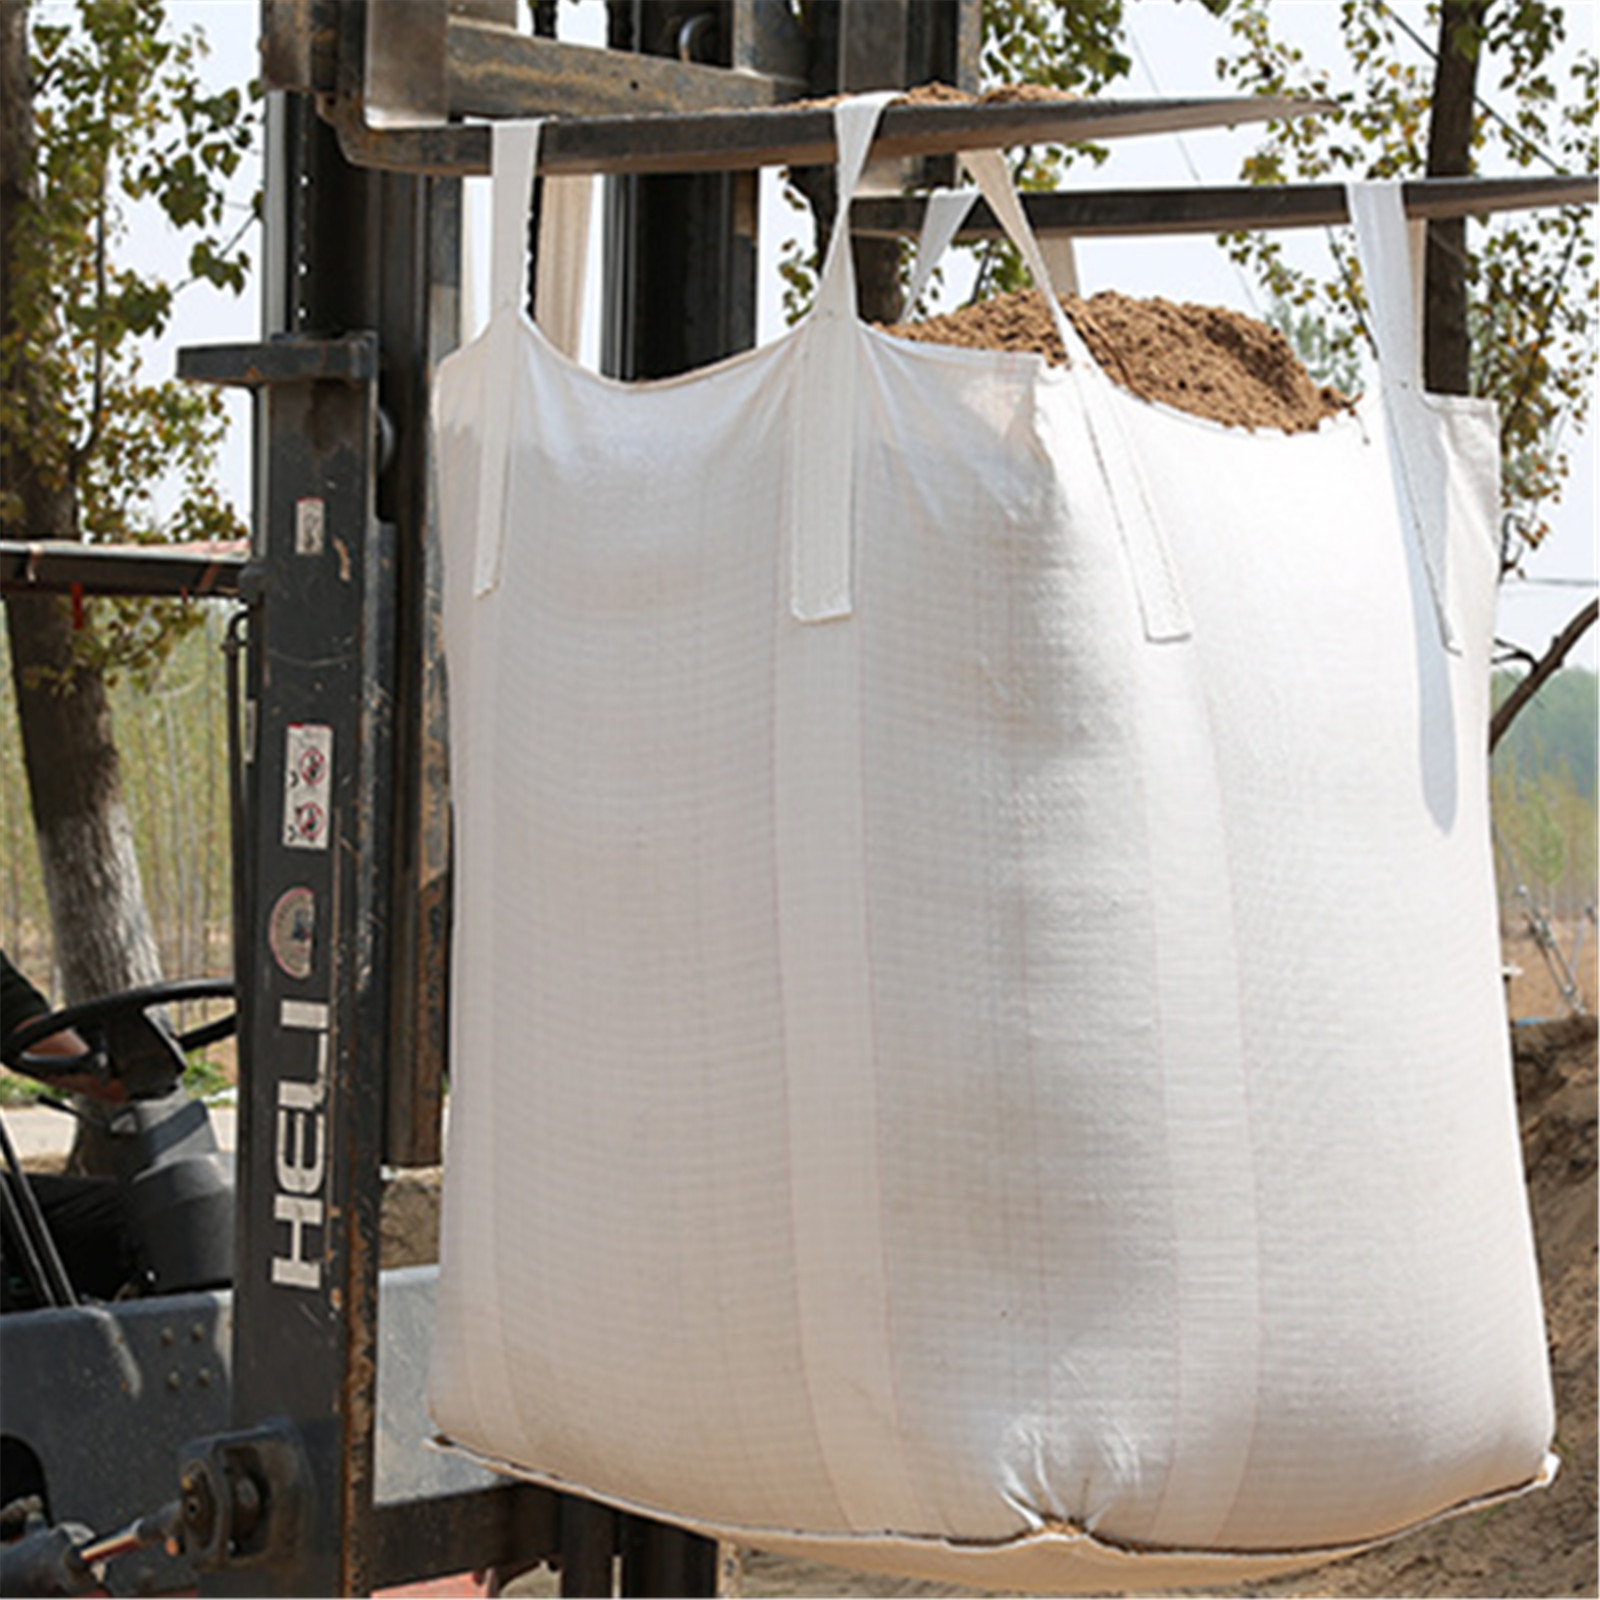 4# 1 Ton Bulk Bag Fibc Bags Builders Garden Rubble-sack Fibc Tonne Jumbo-waste Storage Bag For Gardening And Manufactured